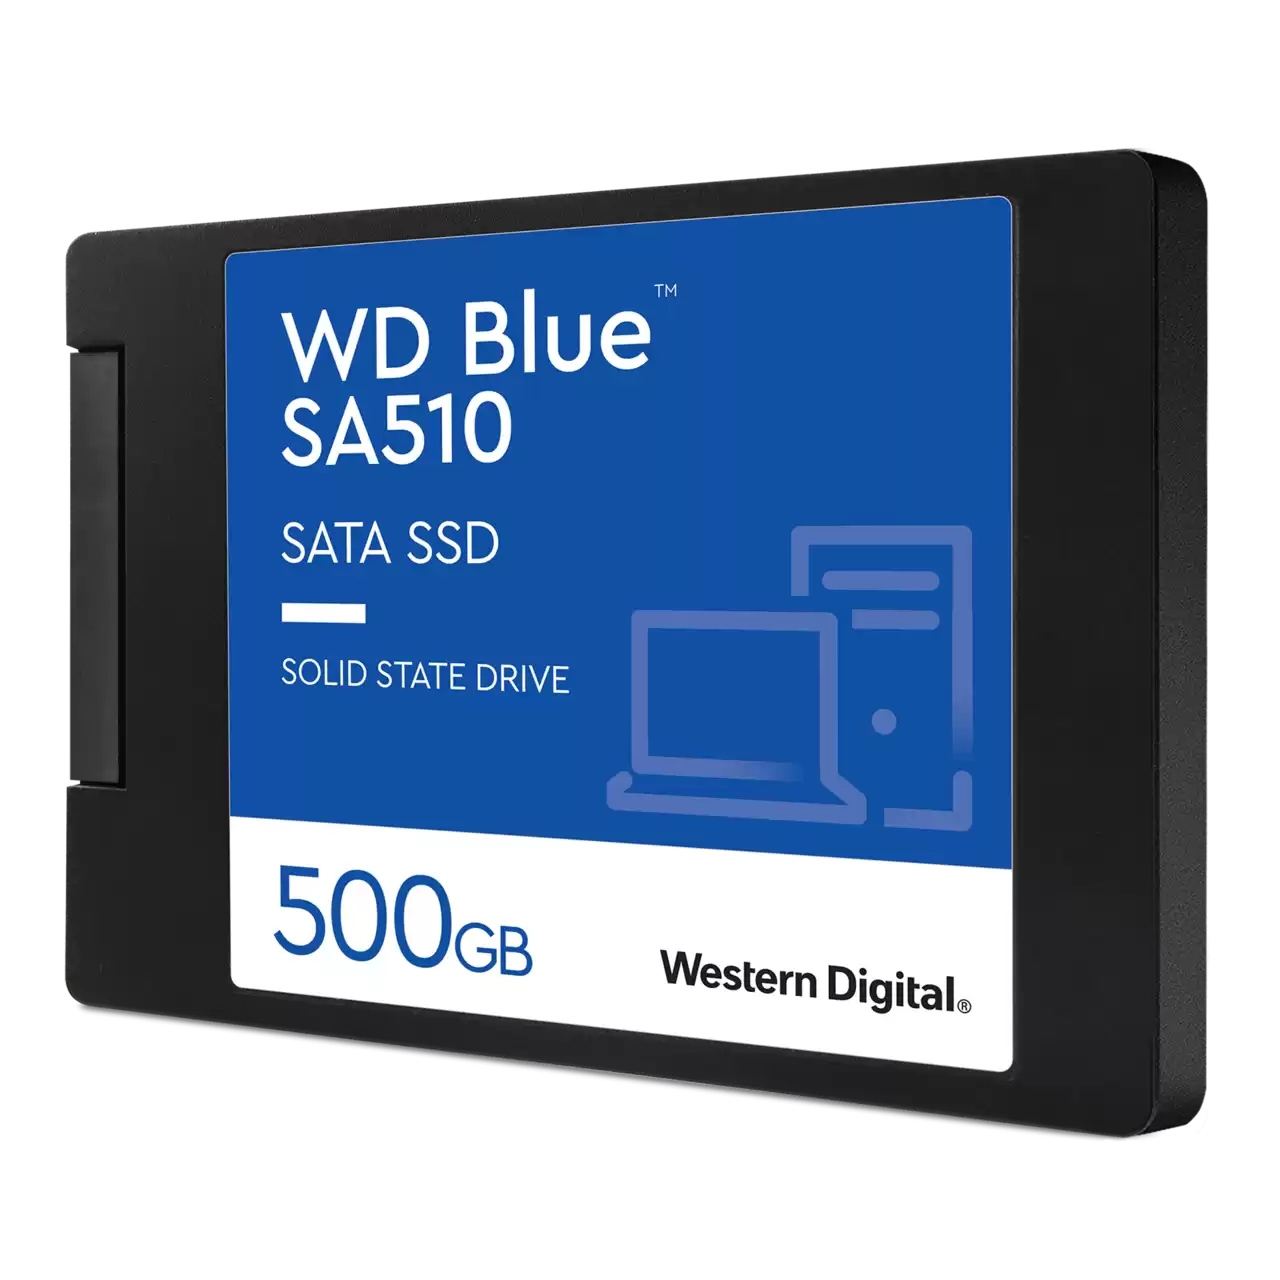 WD Blue SA510 SSD 500GB SATA III 6Gb/s cased 2.5inch 7mm internal single-packed